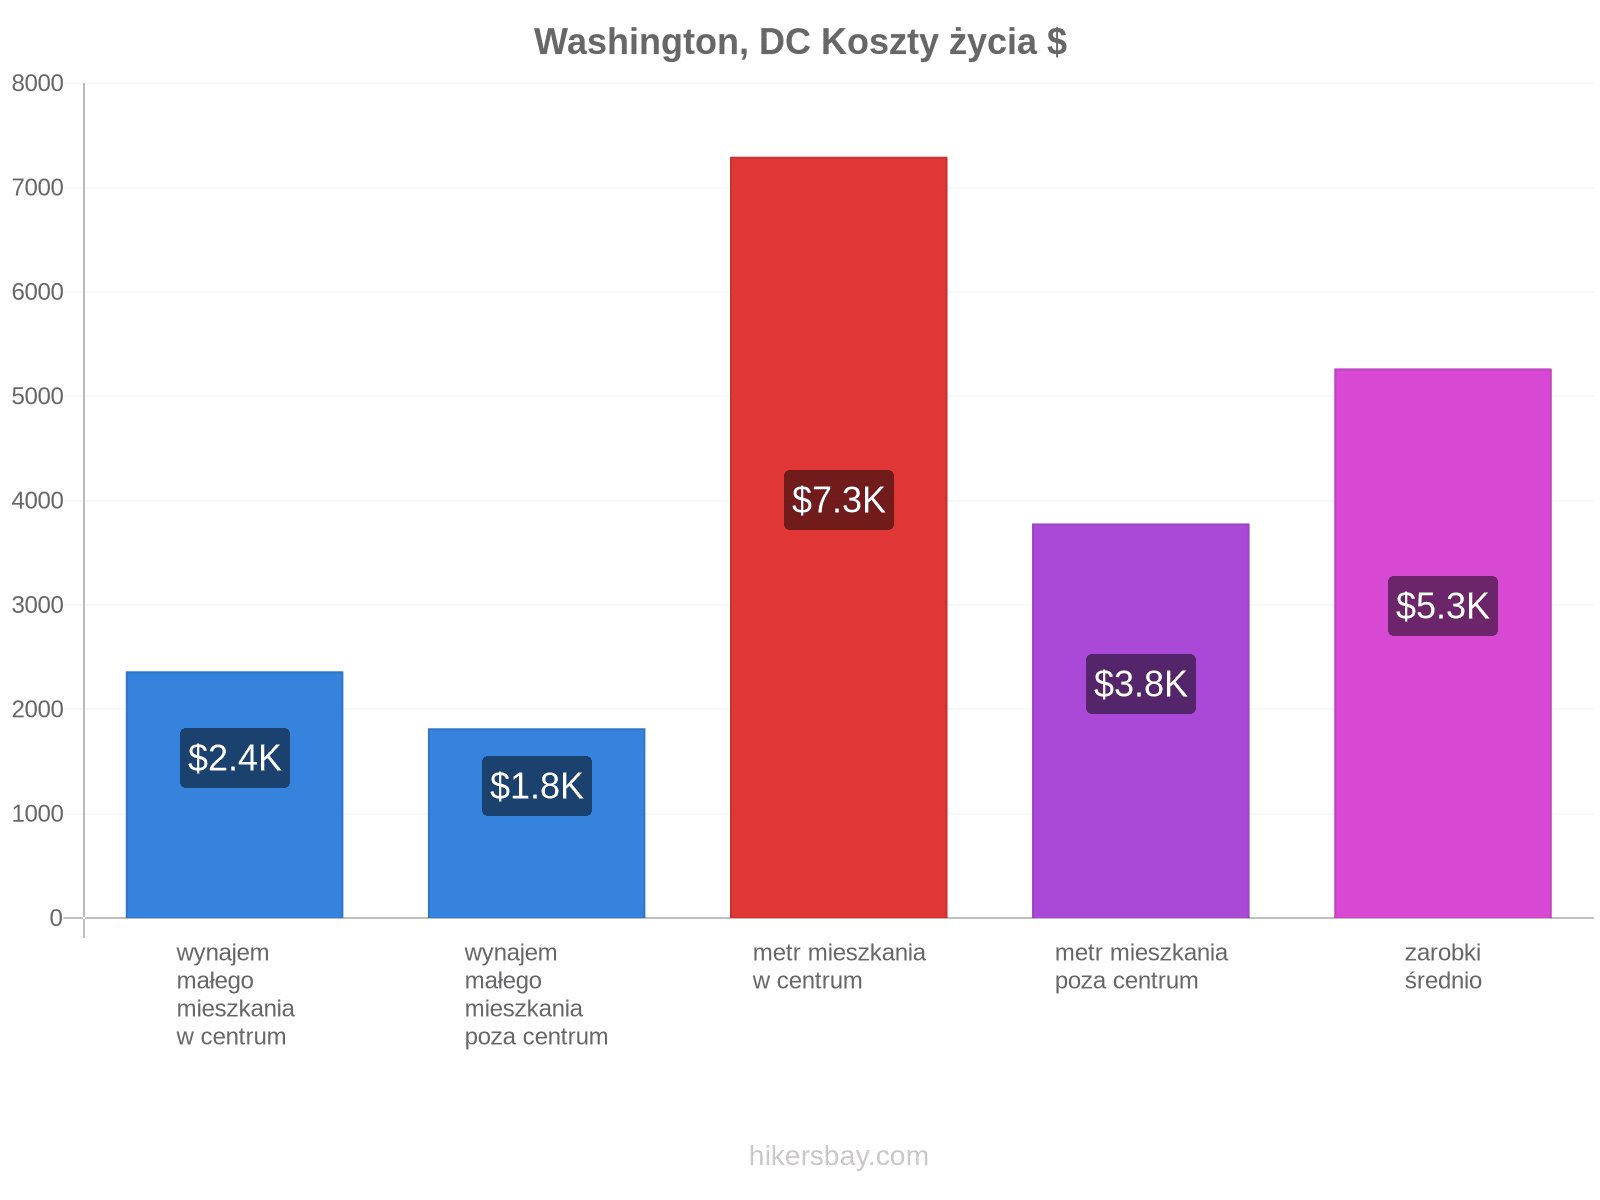 Washington, DC koszty życia hikersbay.com